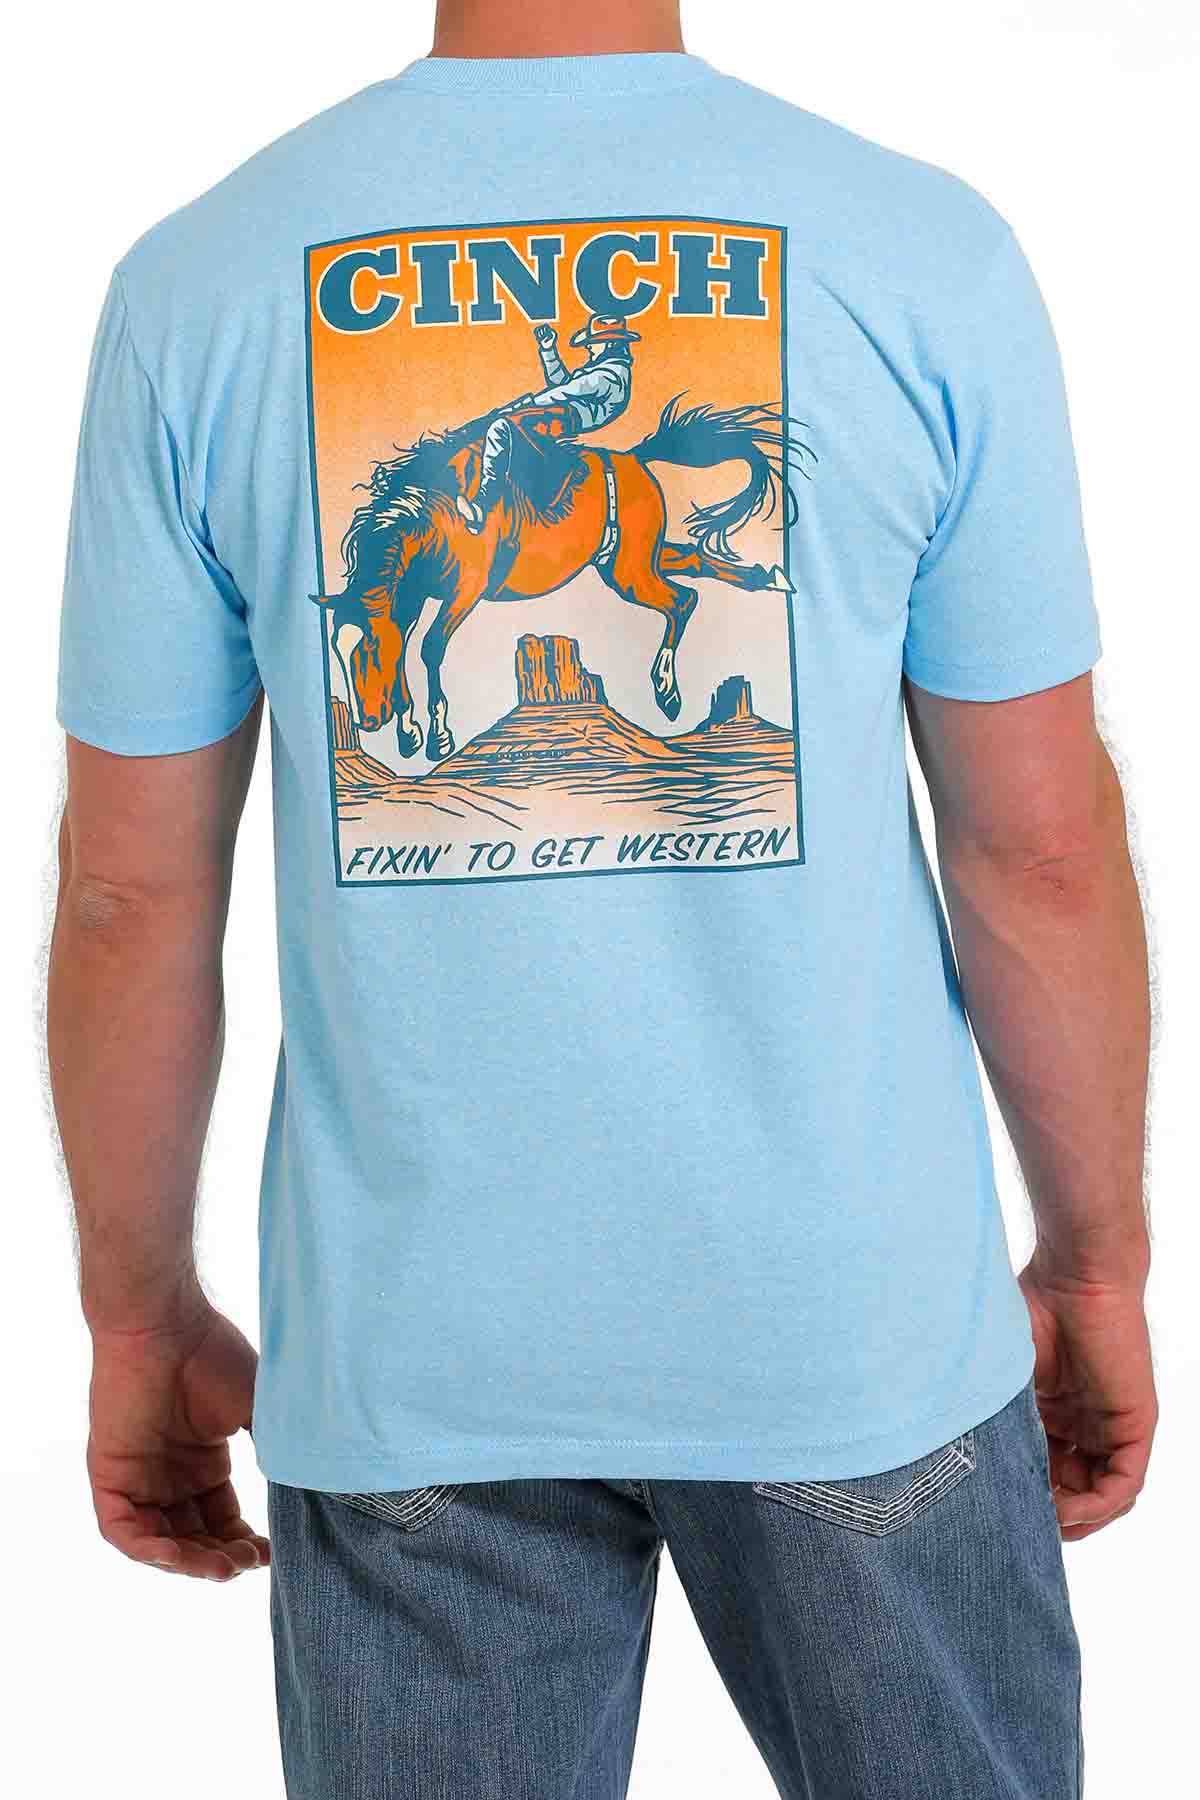 Men's Cinch "Fixin' To Get Western" Graphic T-Shirt Heather Light Blue